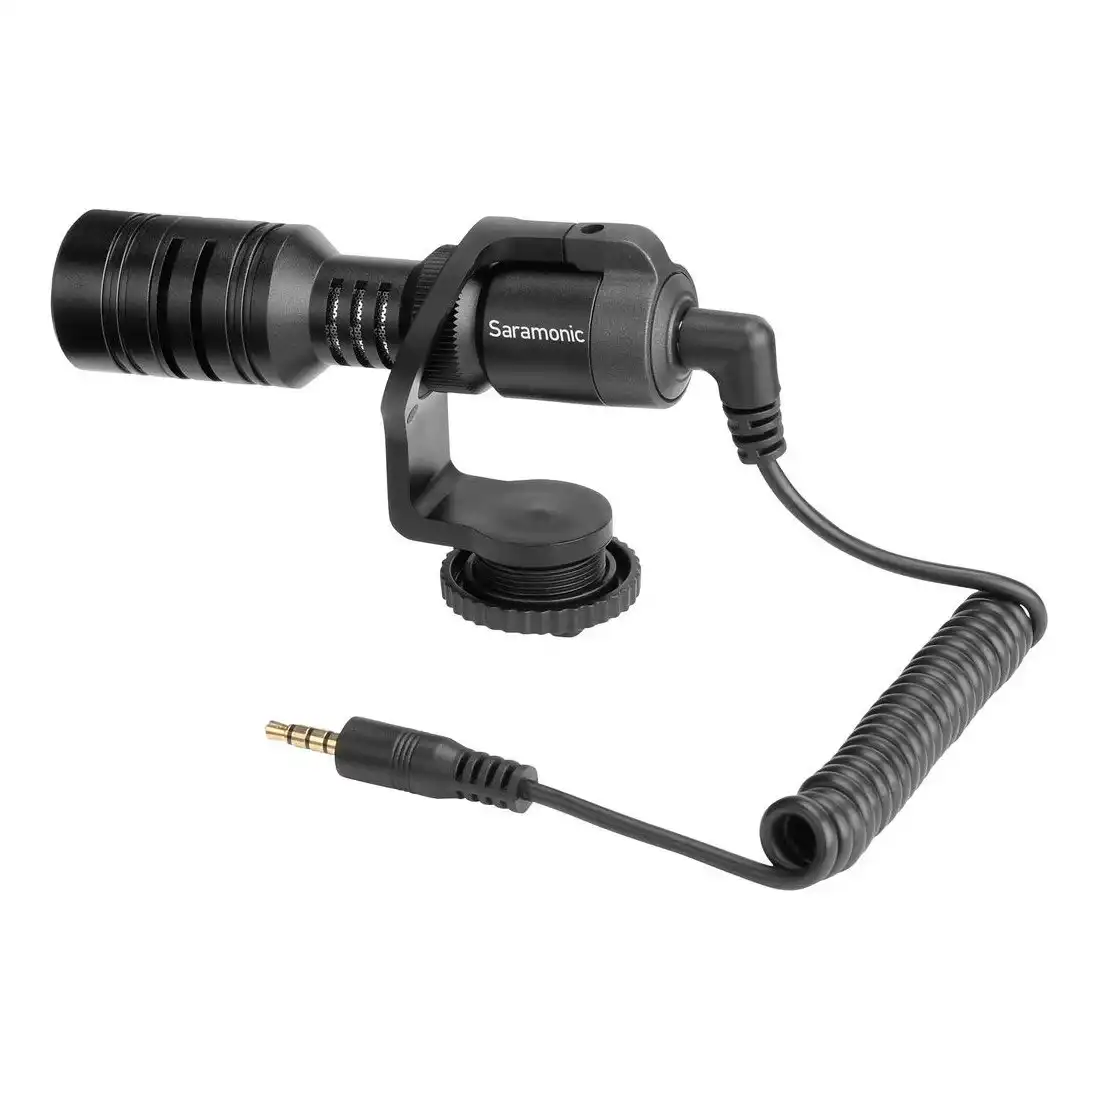 Saramonic Vmic Mini Ultracompact Camera-Mount Shotgun Microphone for DSLR & Smartphone